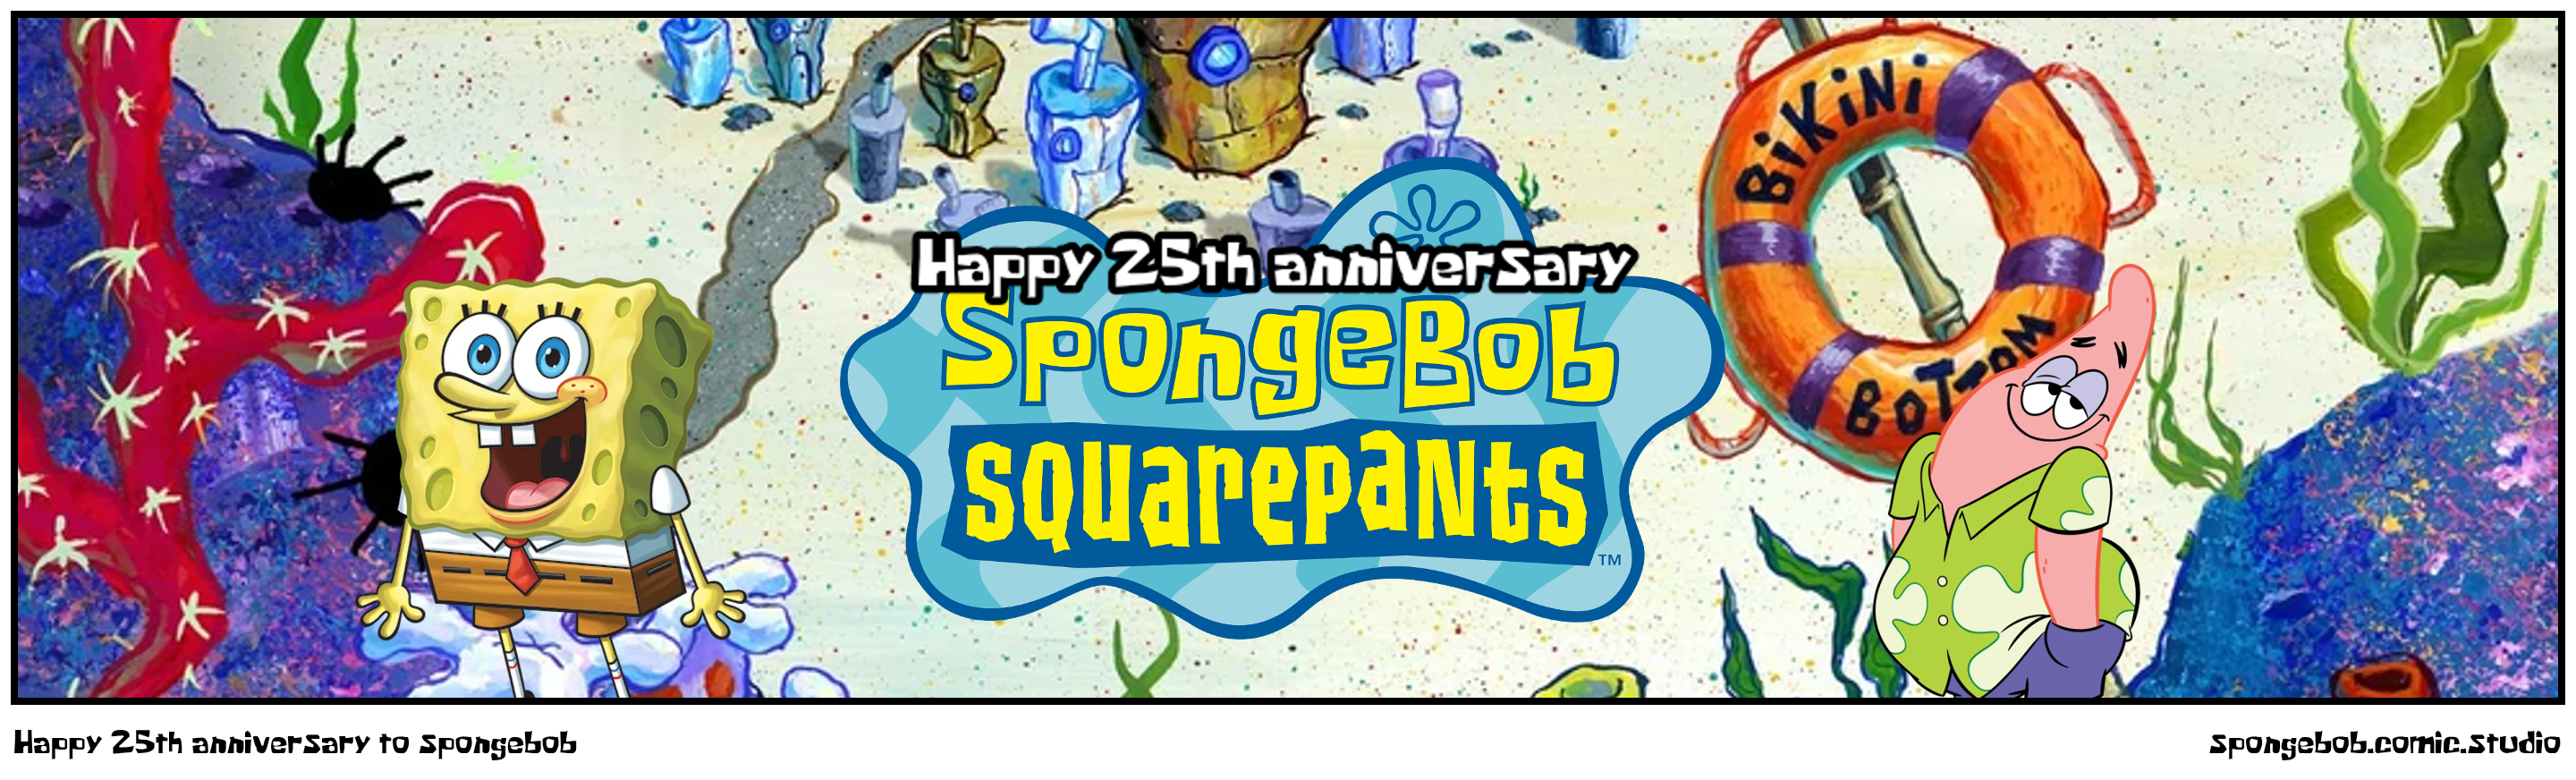 Happy 25th anniversary to spongebob